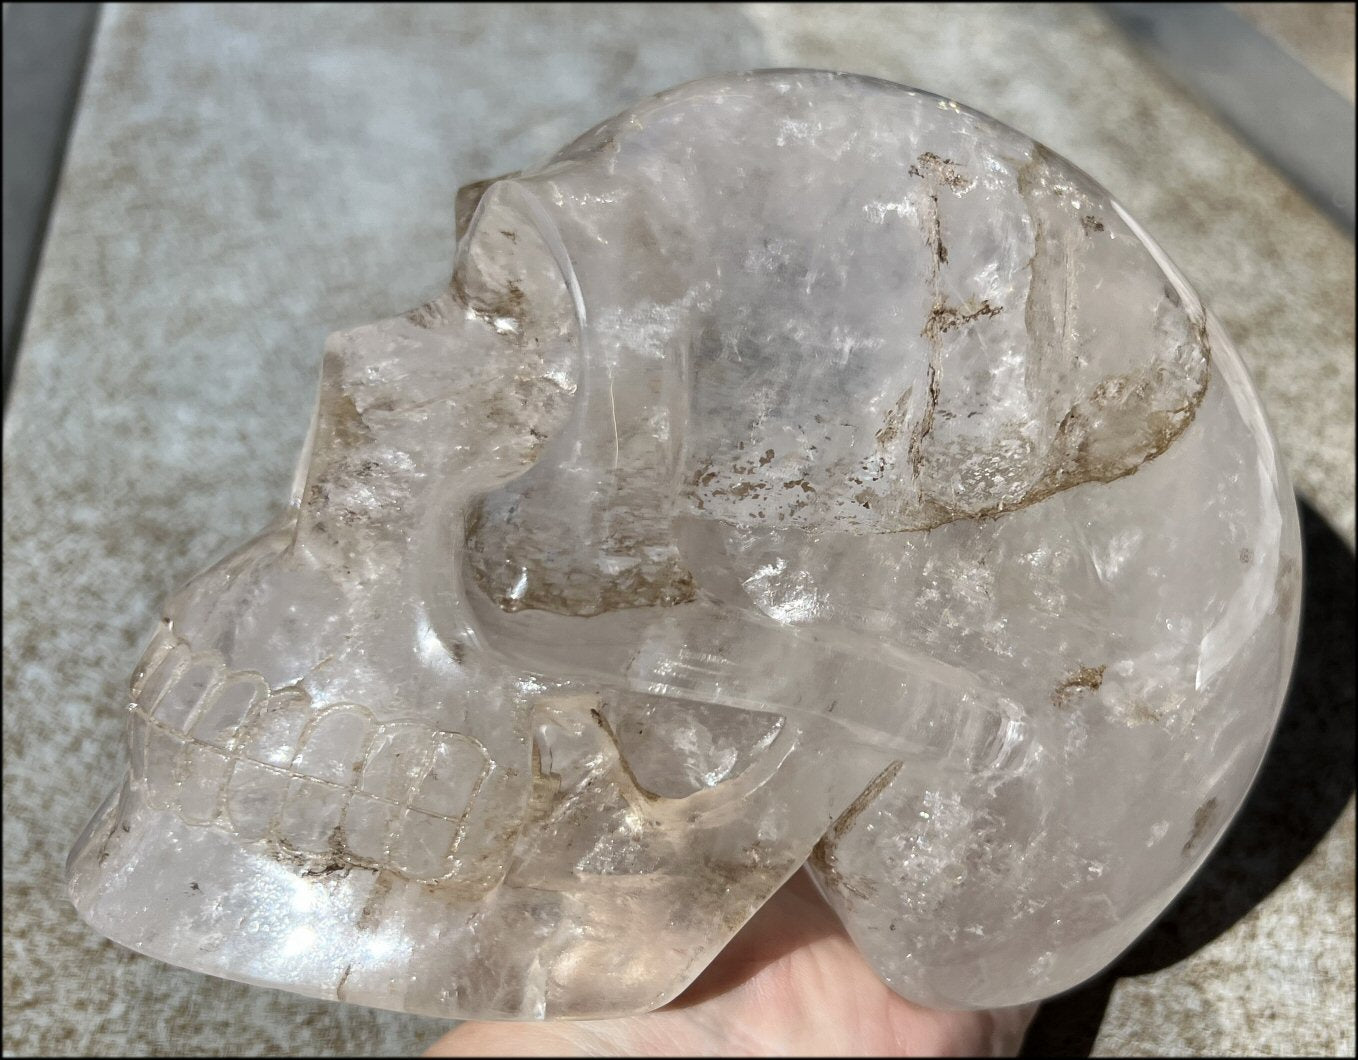 LifeSize Himalayan Quartz Crystal Skull with Chlorite, Hematite, Manganese streaking + Shimmery Rainbows